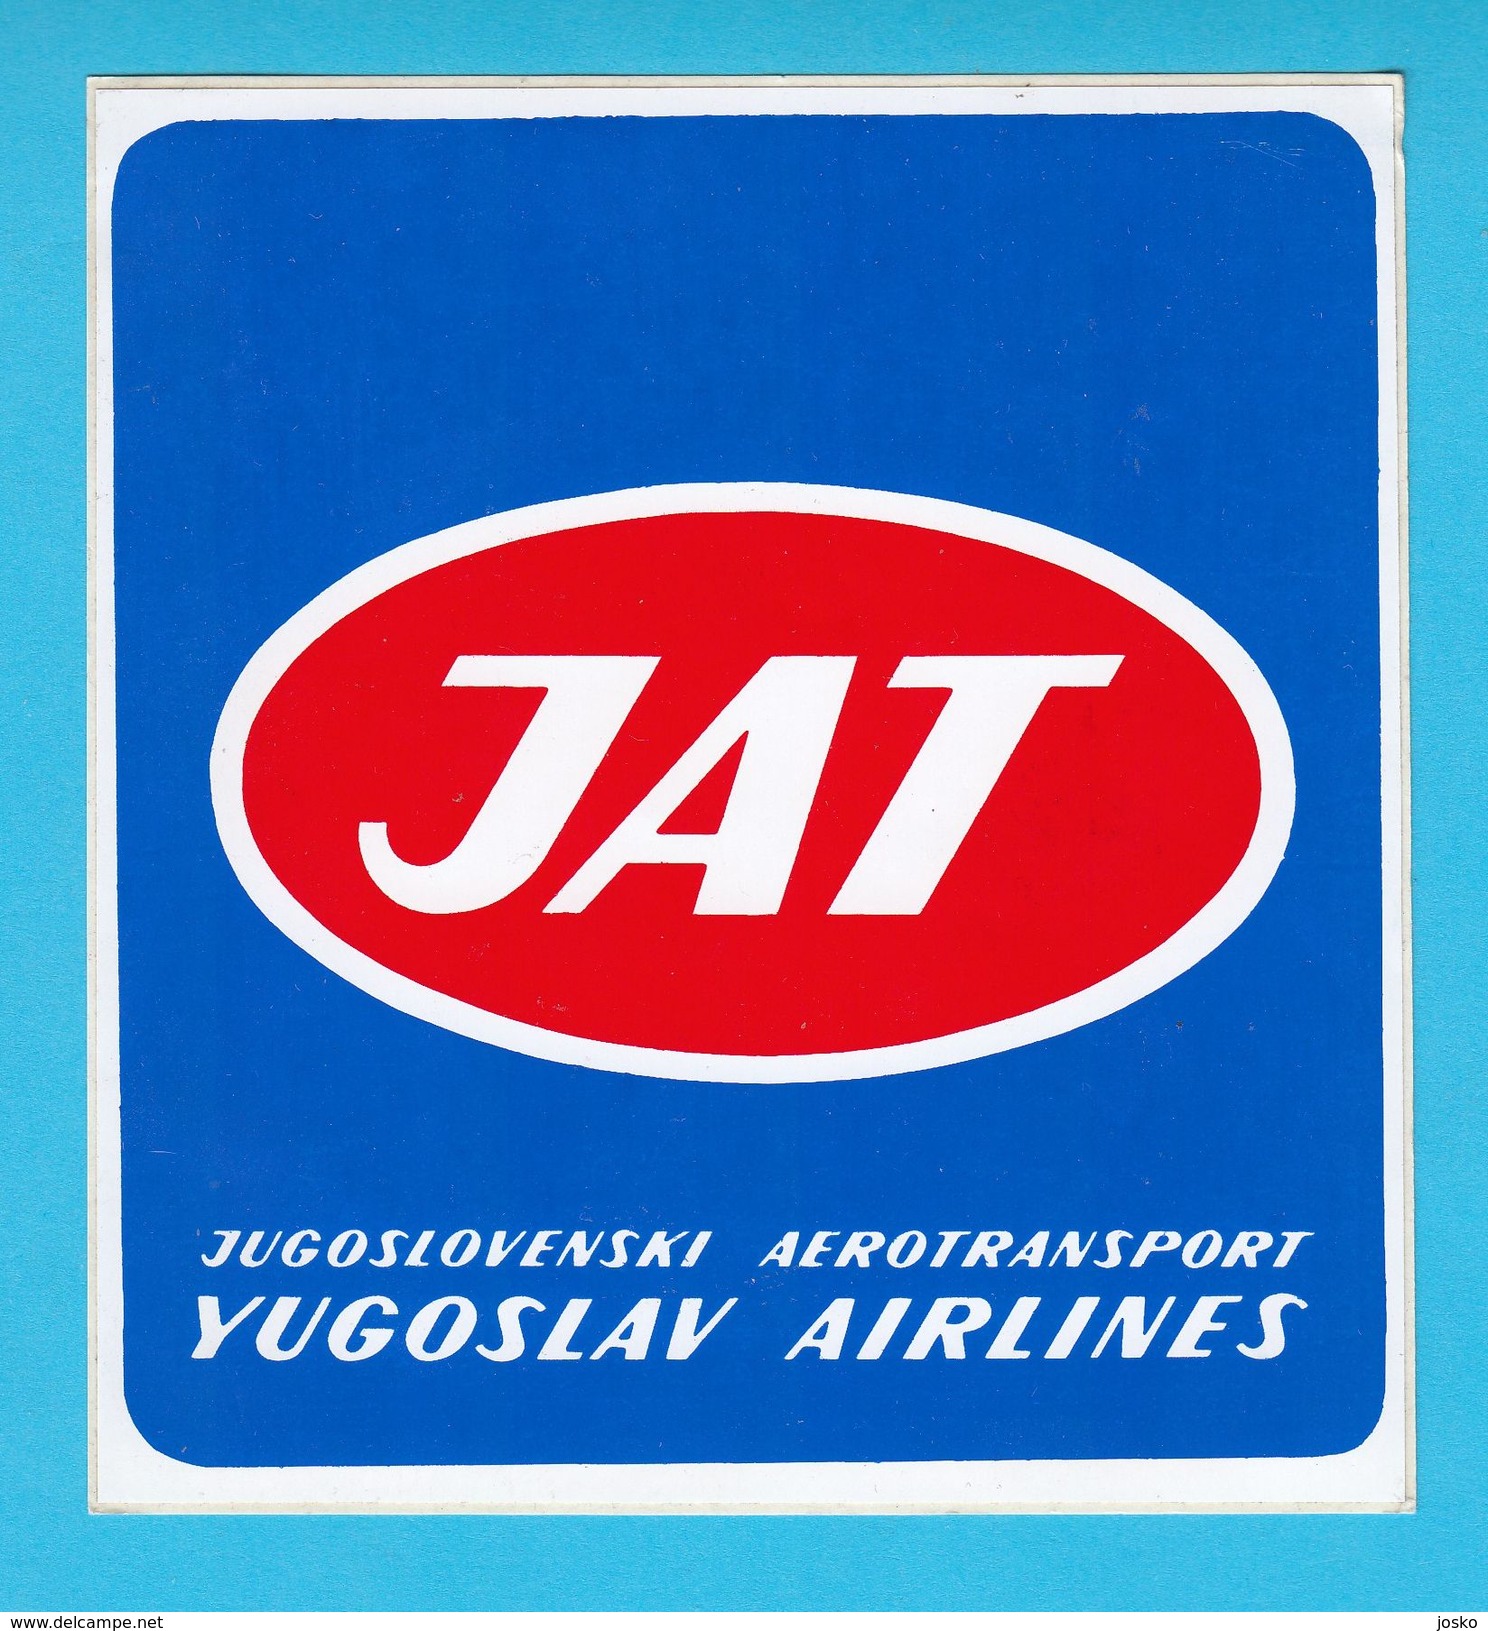 JAT - YUGOSLAV AIRLINES ... Vintage Official Sticker * National Airways * Plane * Avion * No. 5 - Autocollants